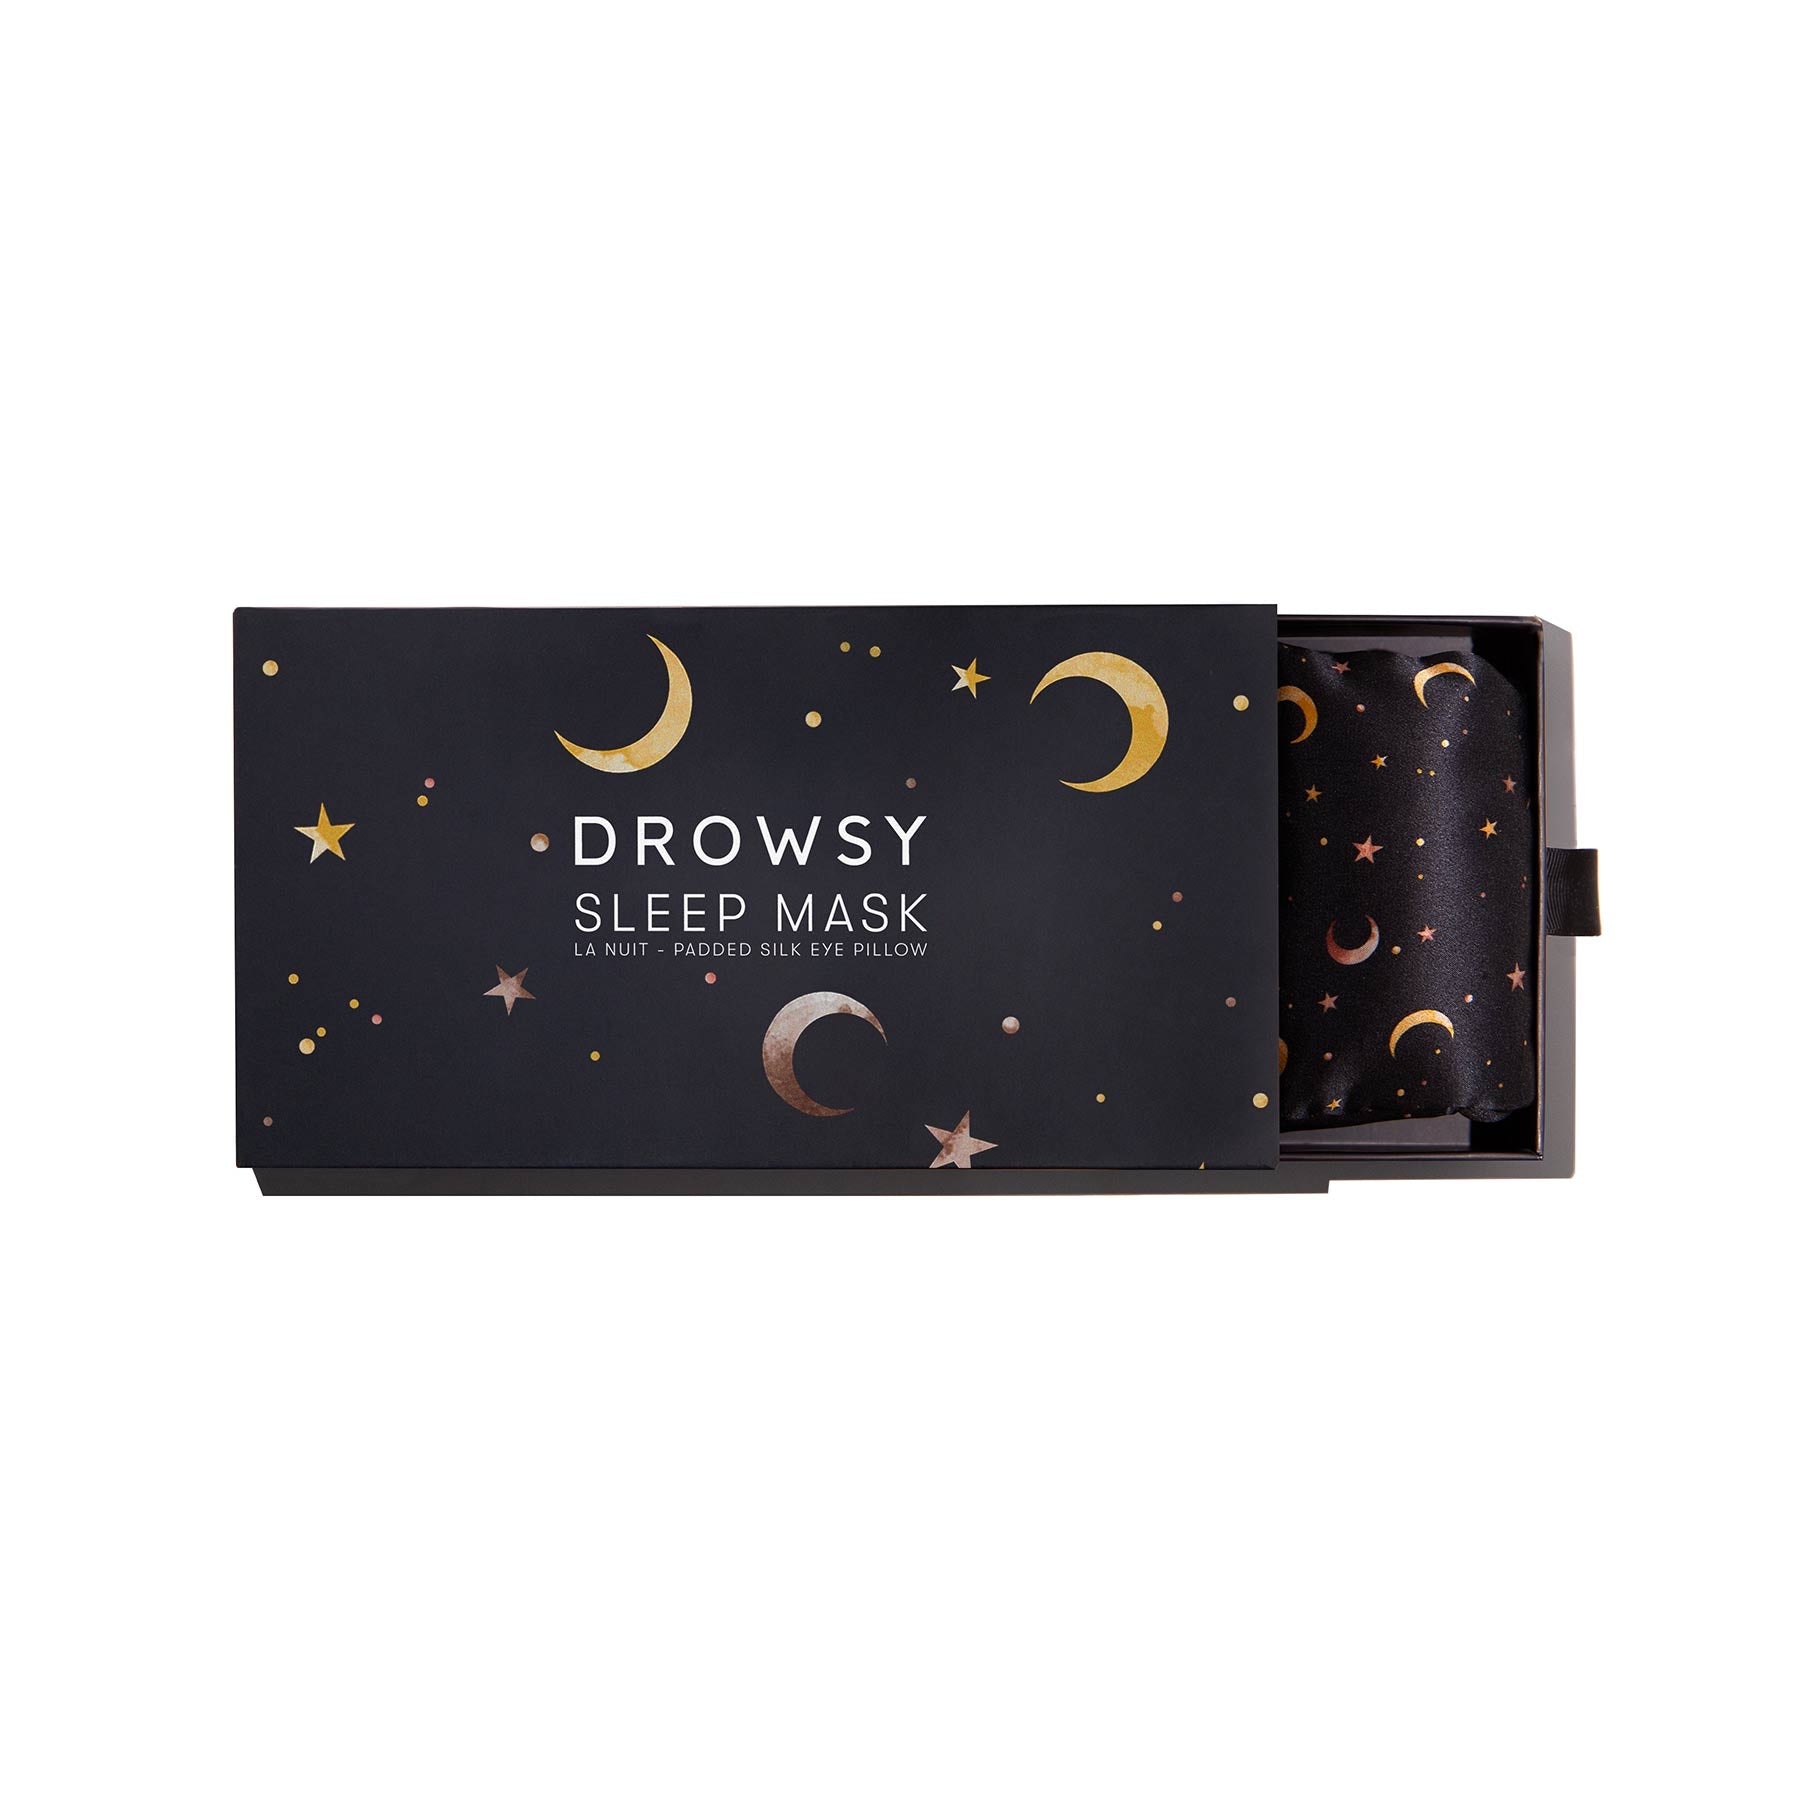 Drowsy Sleep Co. La Nuit Sleep Mask in box on a white background